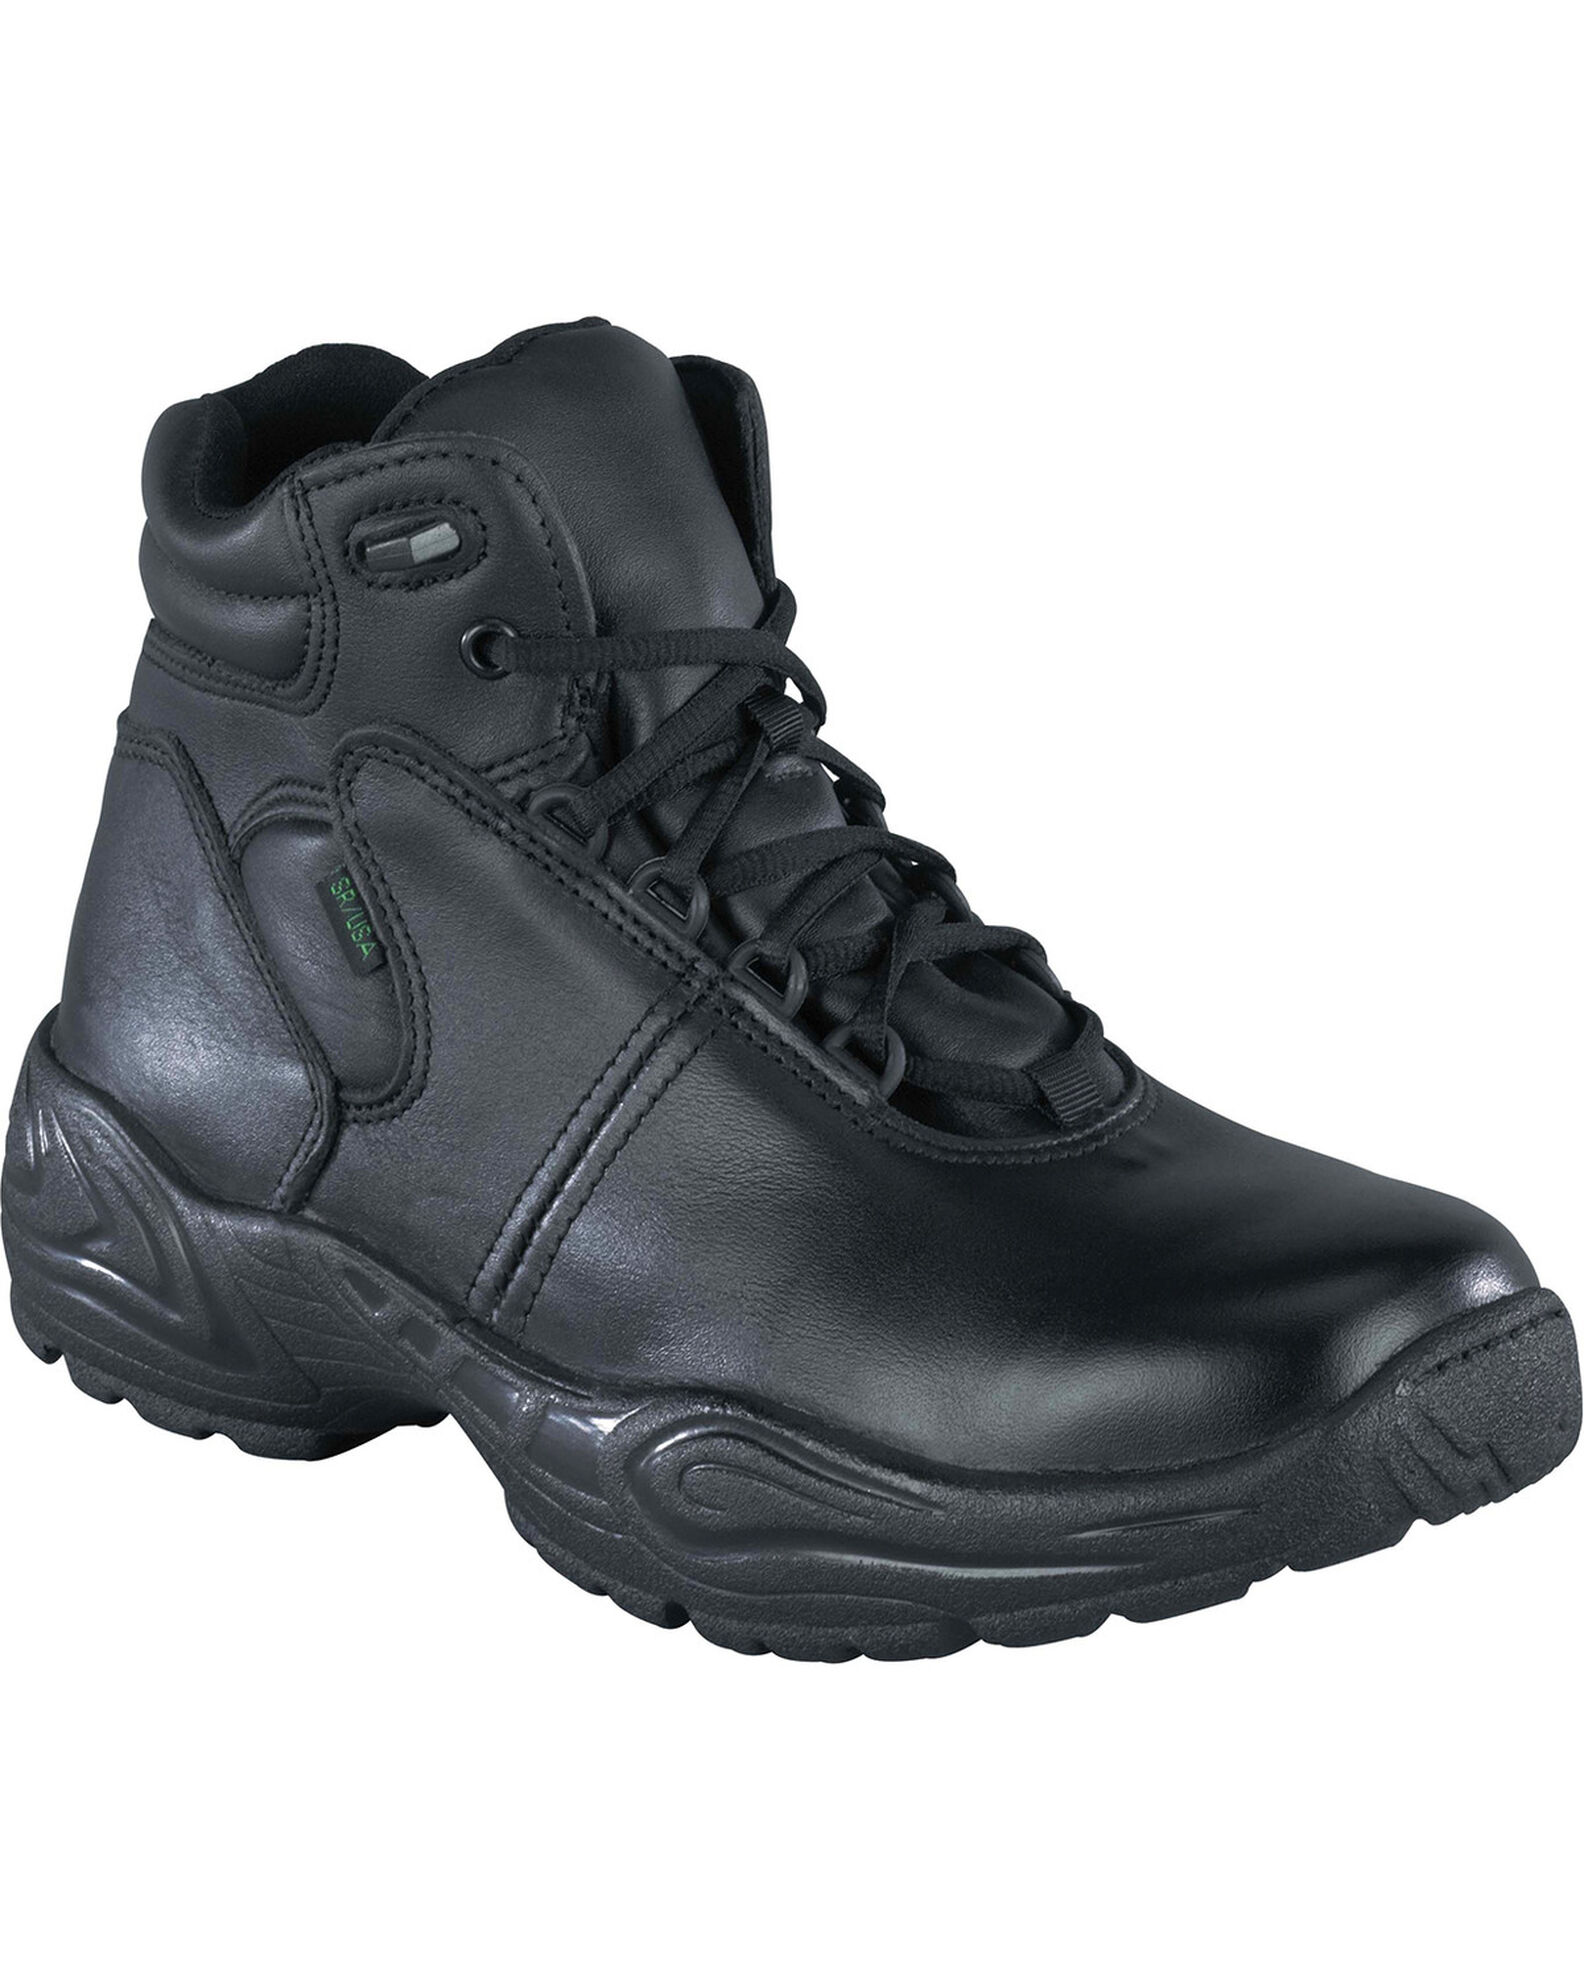 Reebok Men's Chukka Work Boots - USPS Approved